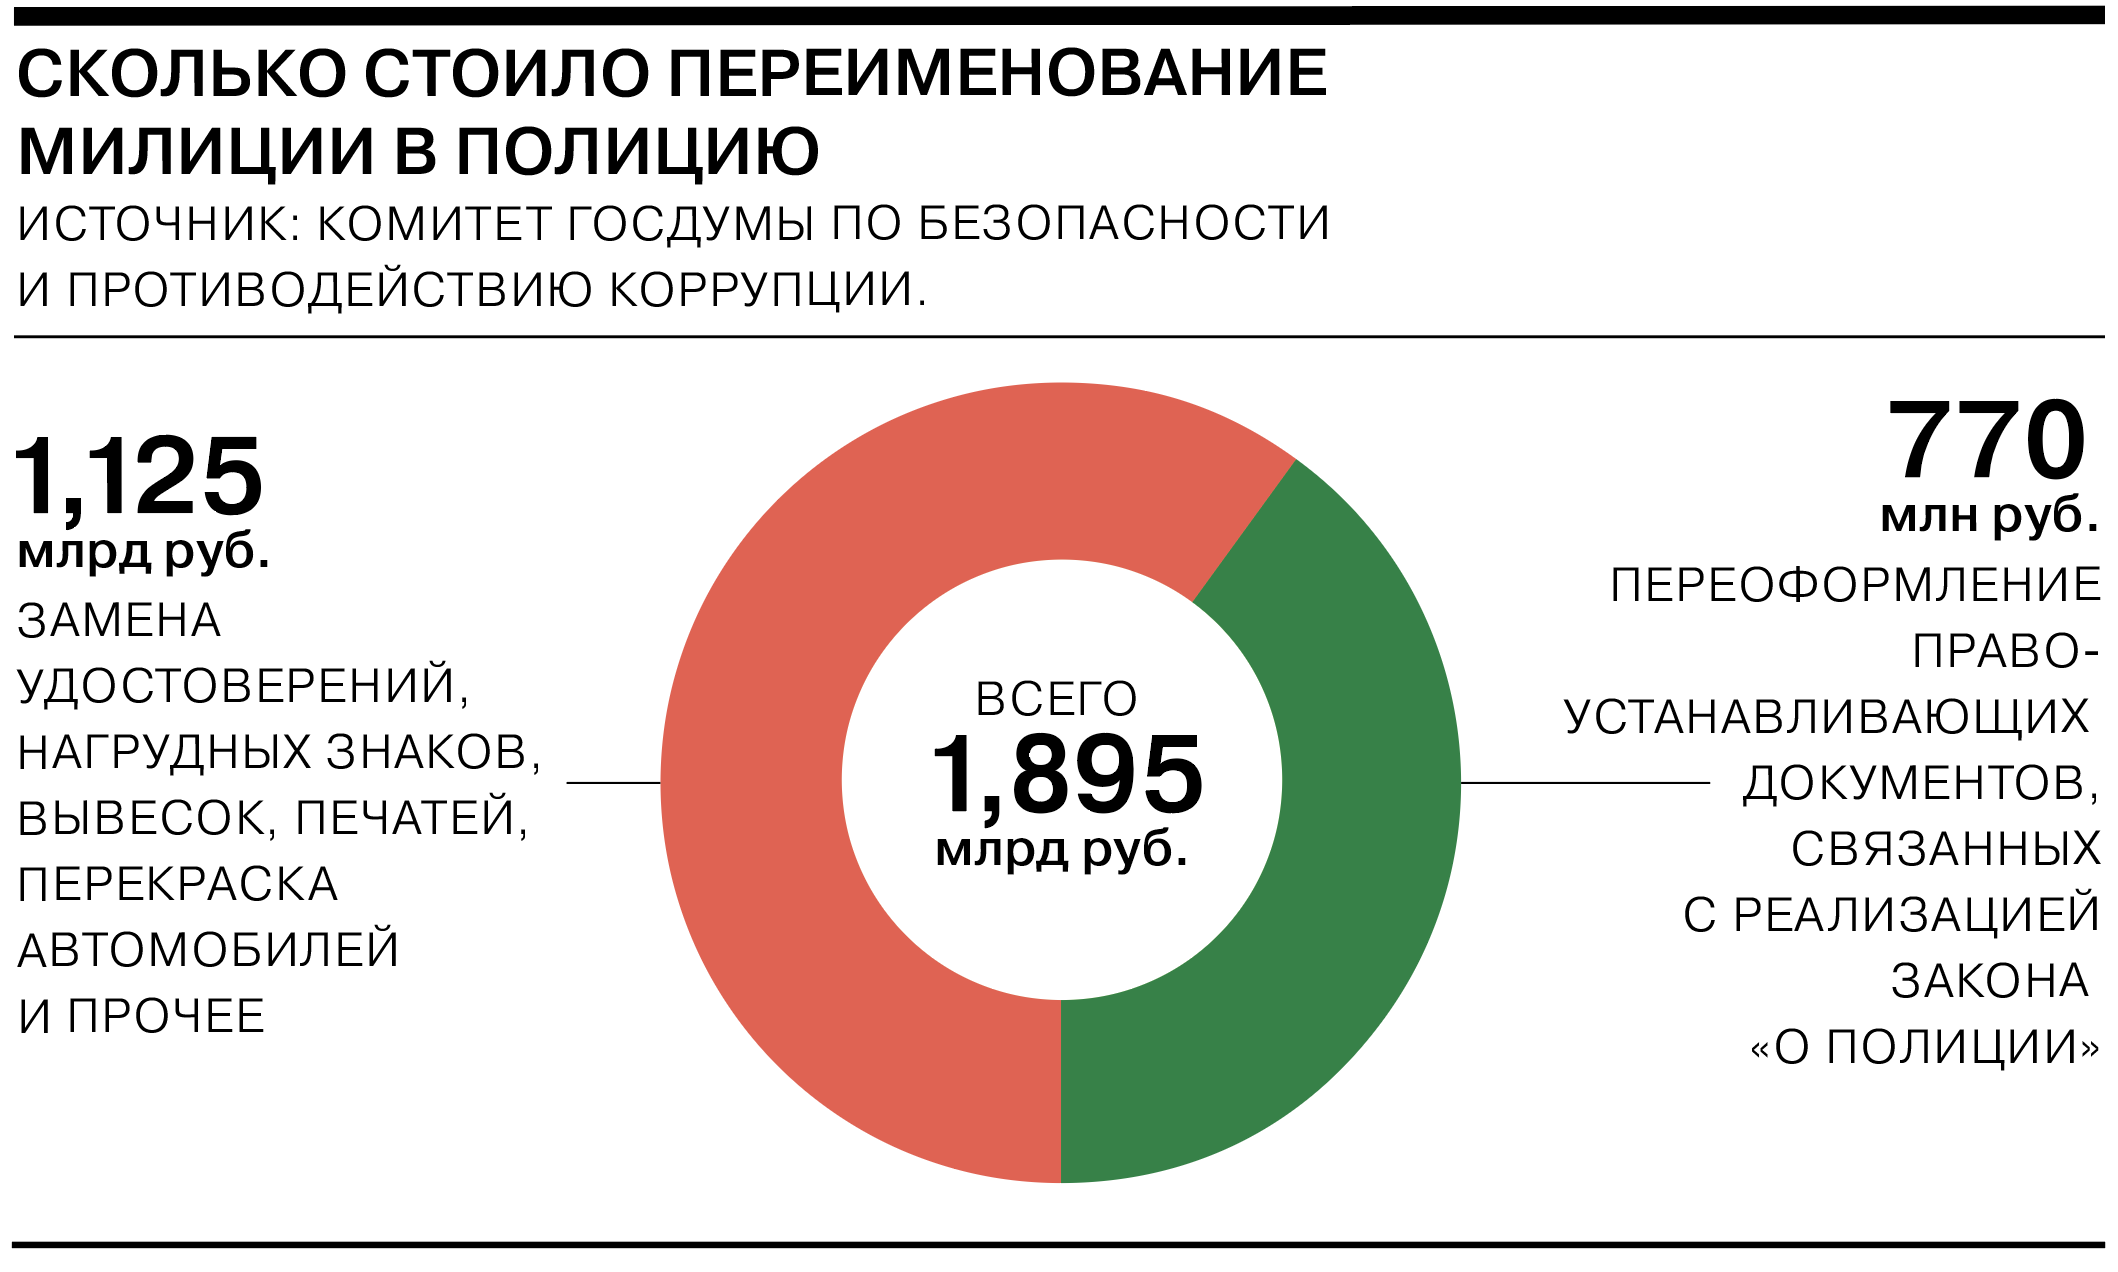 https://im.kommersant.ru/ISSUES.PHOTO/CORP/2021/02/05/10%D1%81%D1%82%D0%BE%D0%B8%D0%BC%D0%BE%D1%81%D1%82%D1%8C.png